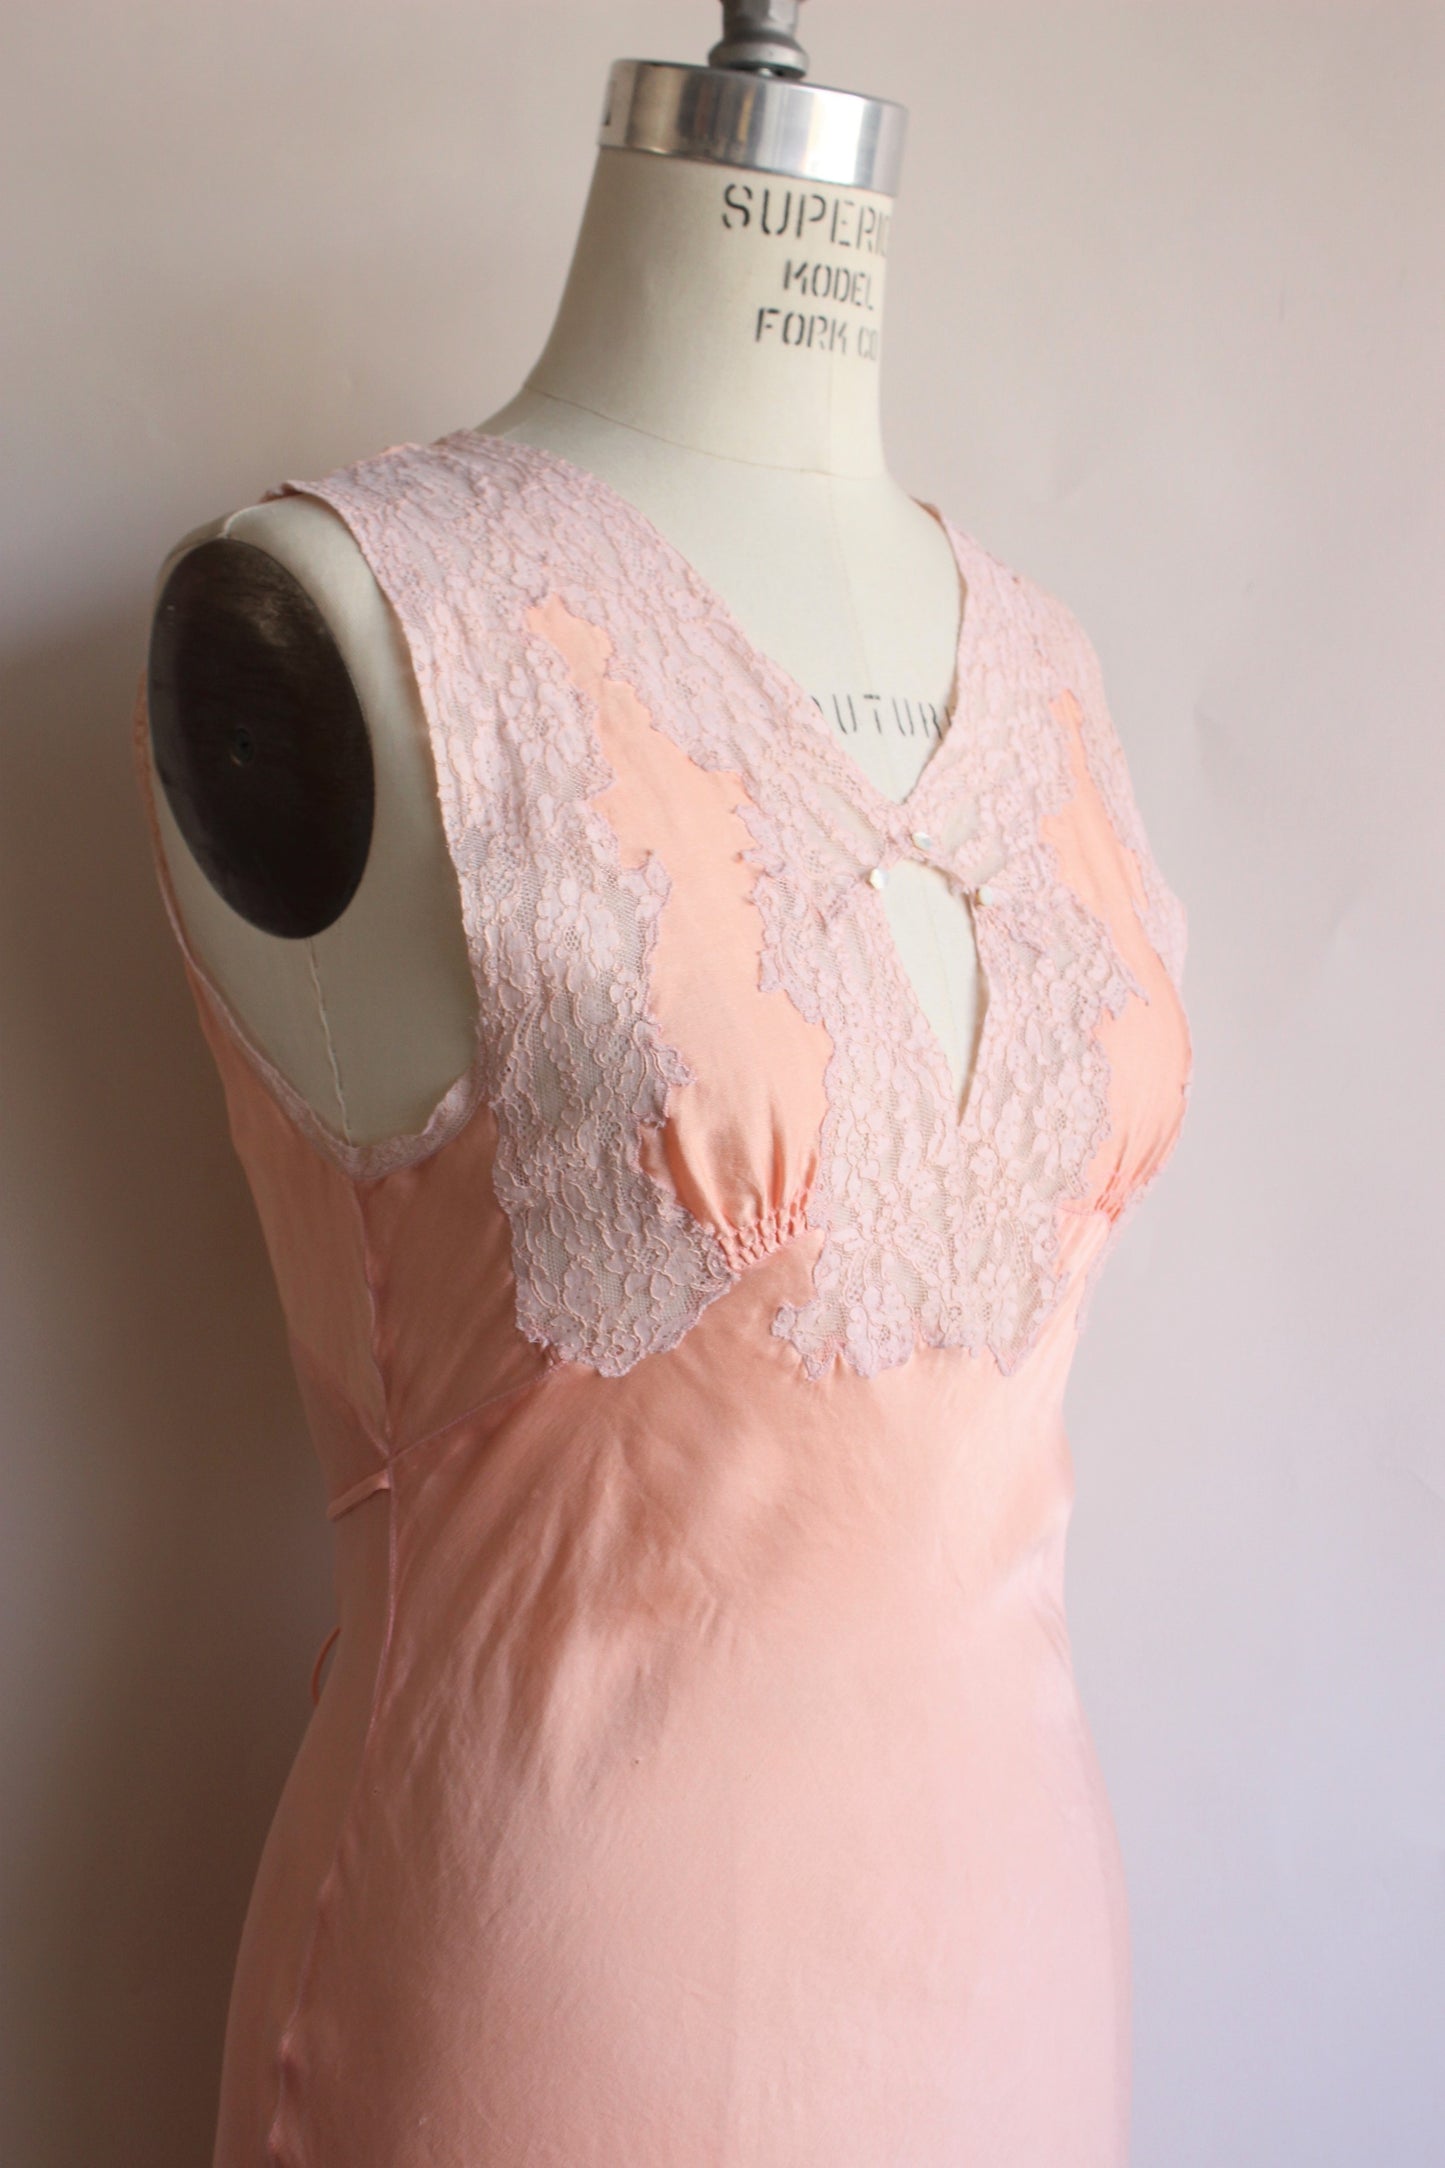 Vintage 1930s Blush Silk Nightgown by Arghin